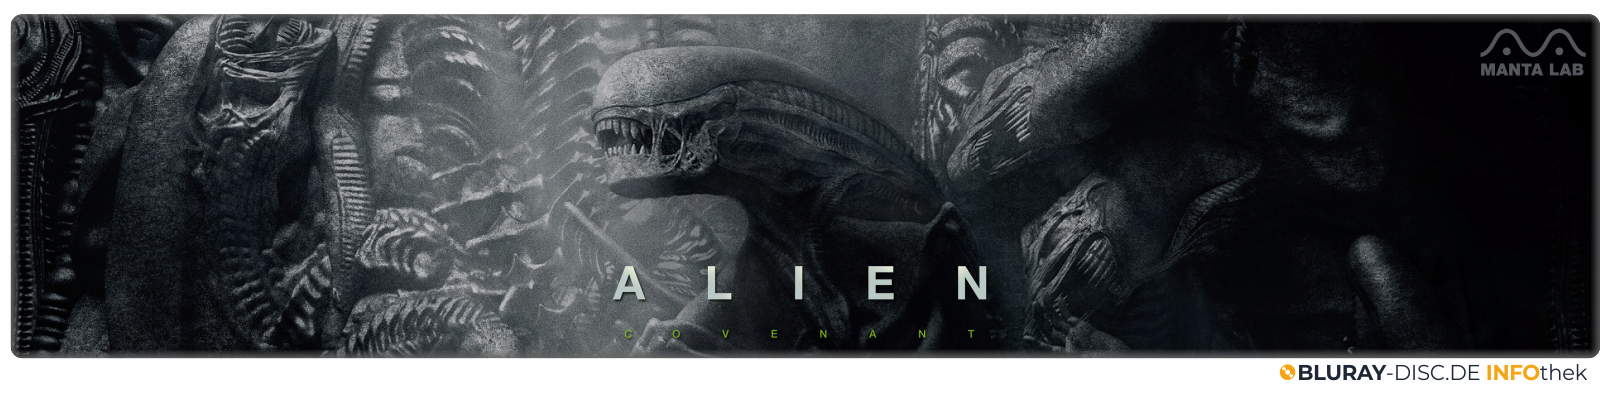 Moviebanner_Manta_Lab_Alien_Covenant.png